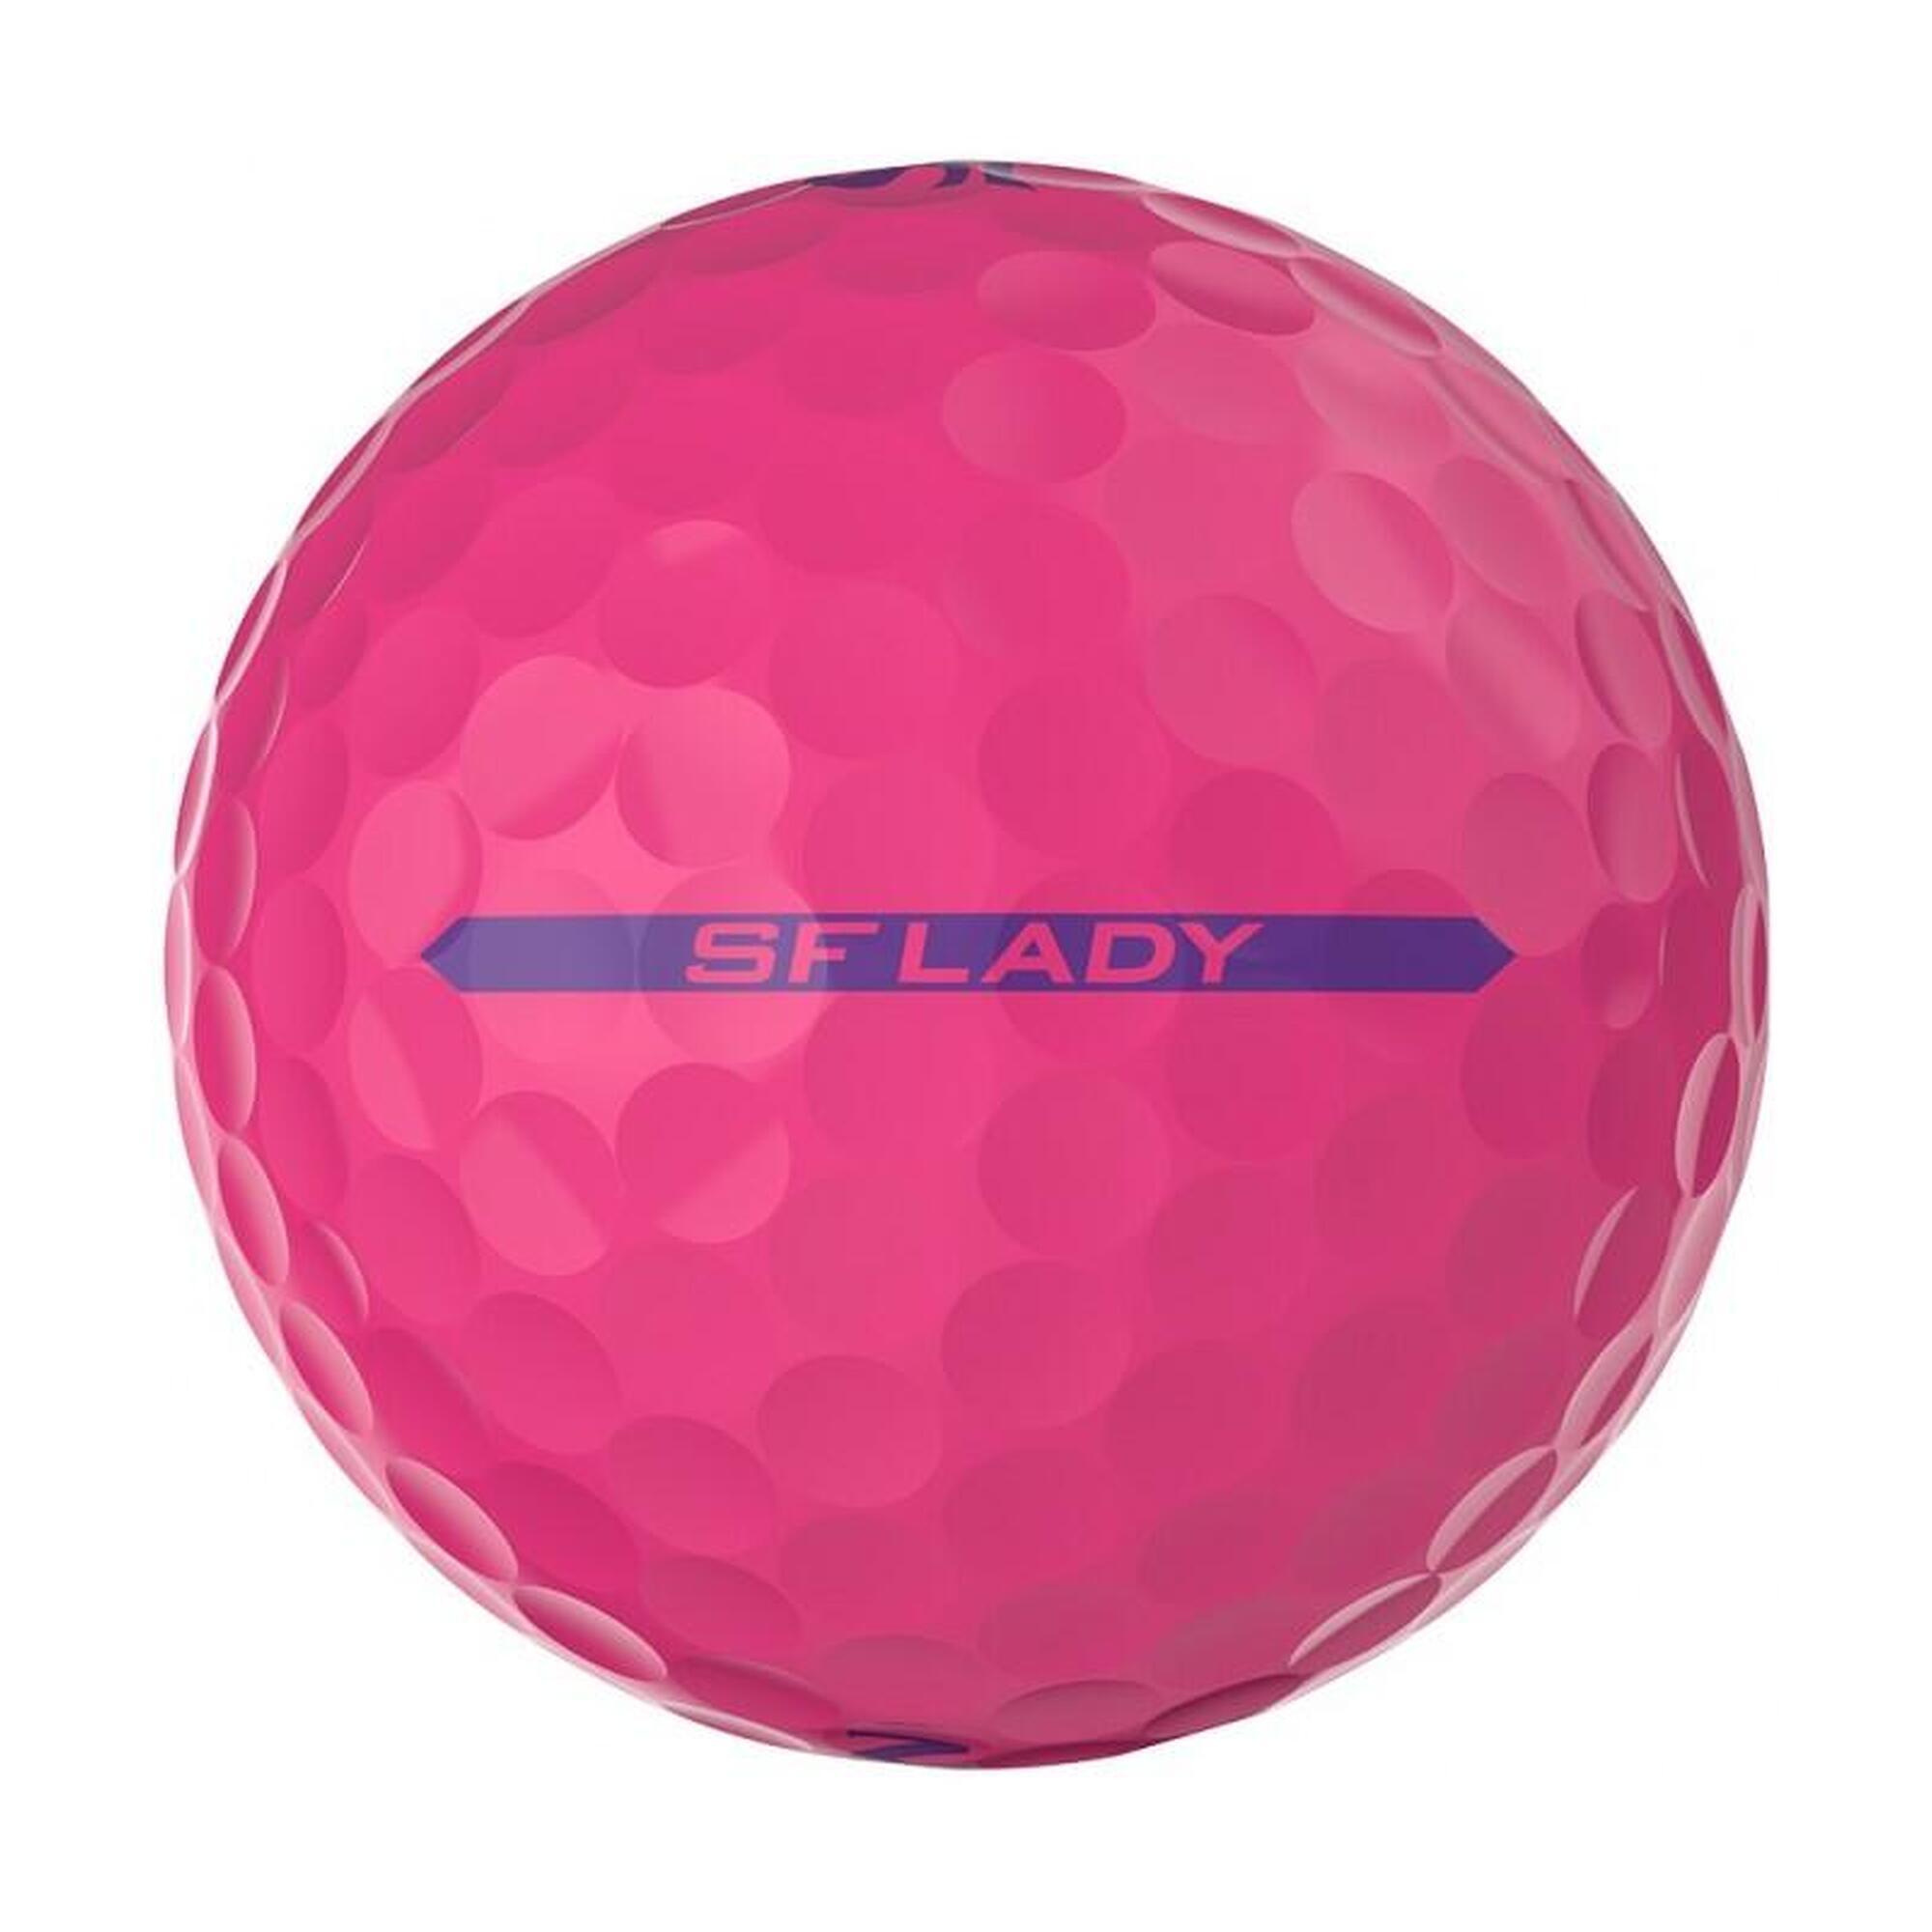 Caixa com 12 bolas de golfe Srixon Soft Feel Ladies Rose Passion New